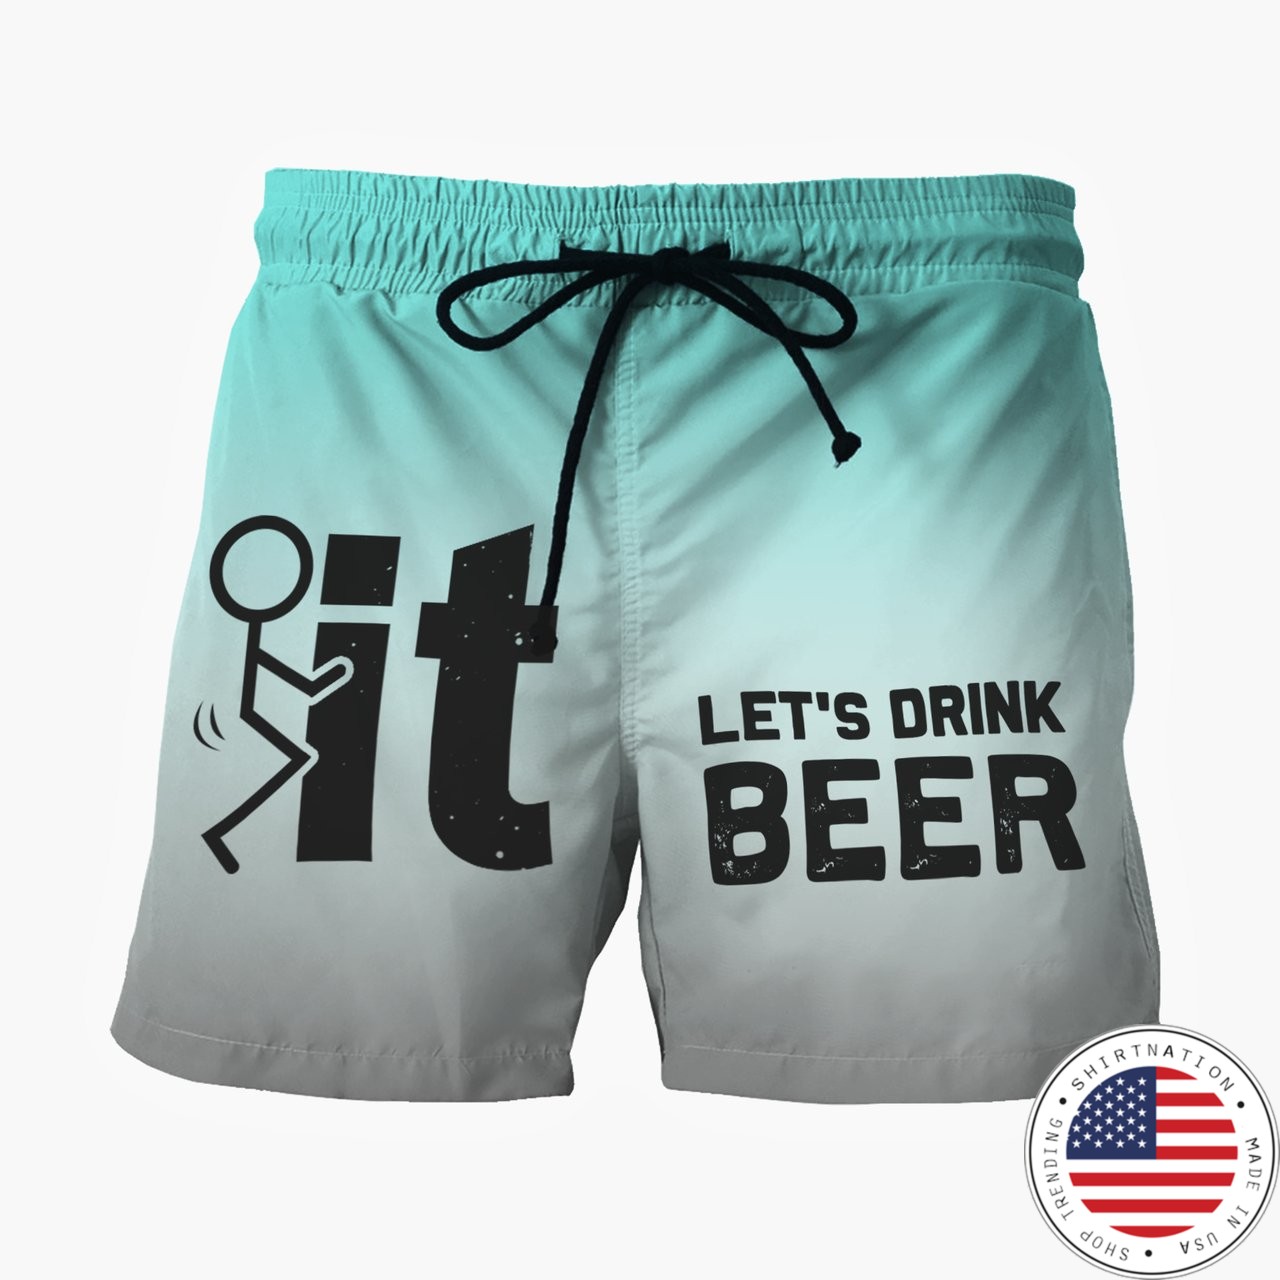 Let's drink beer beach short